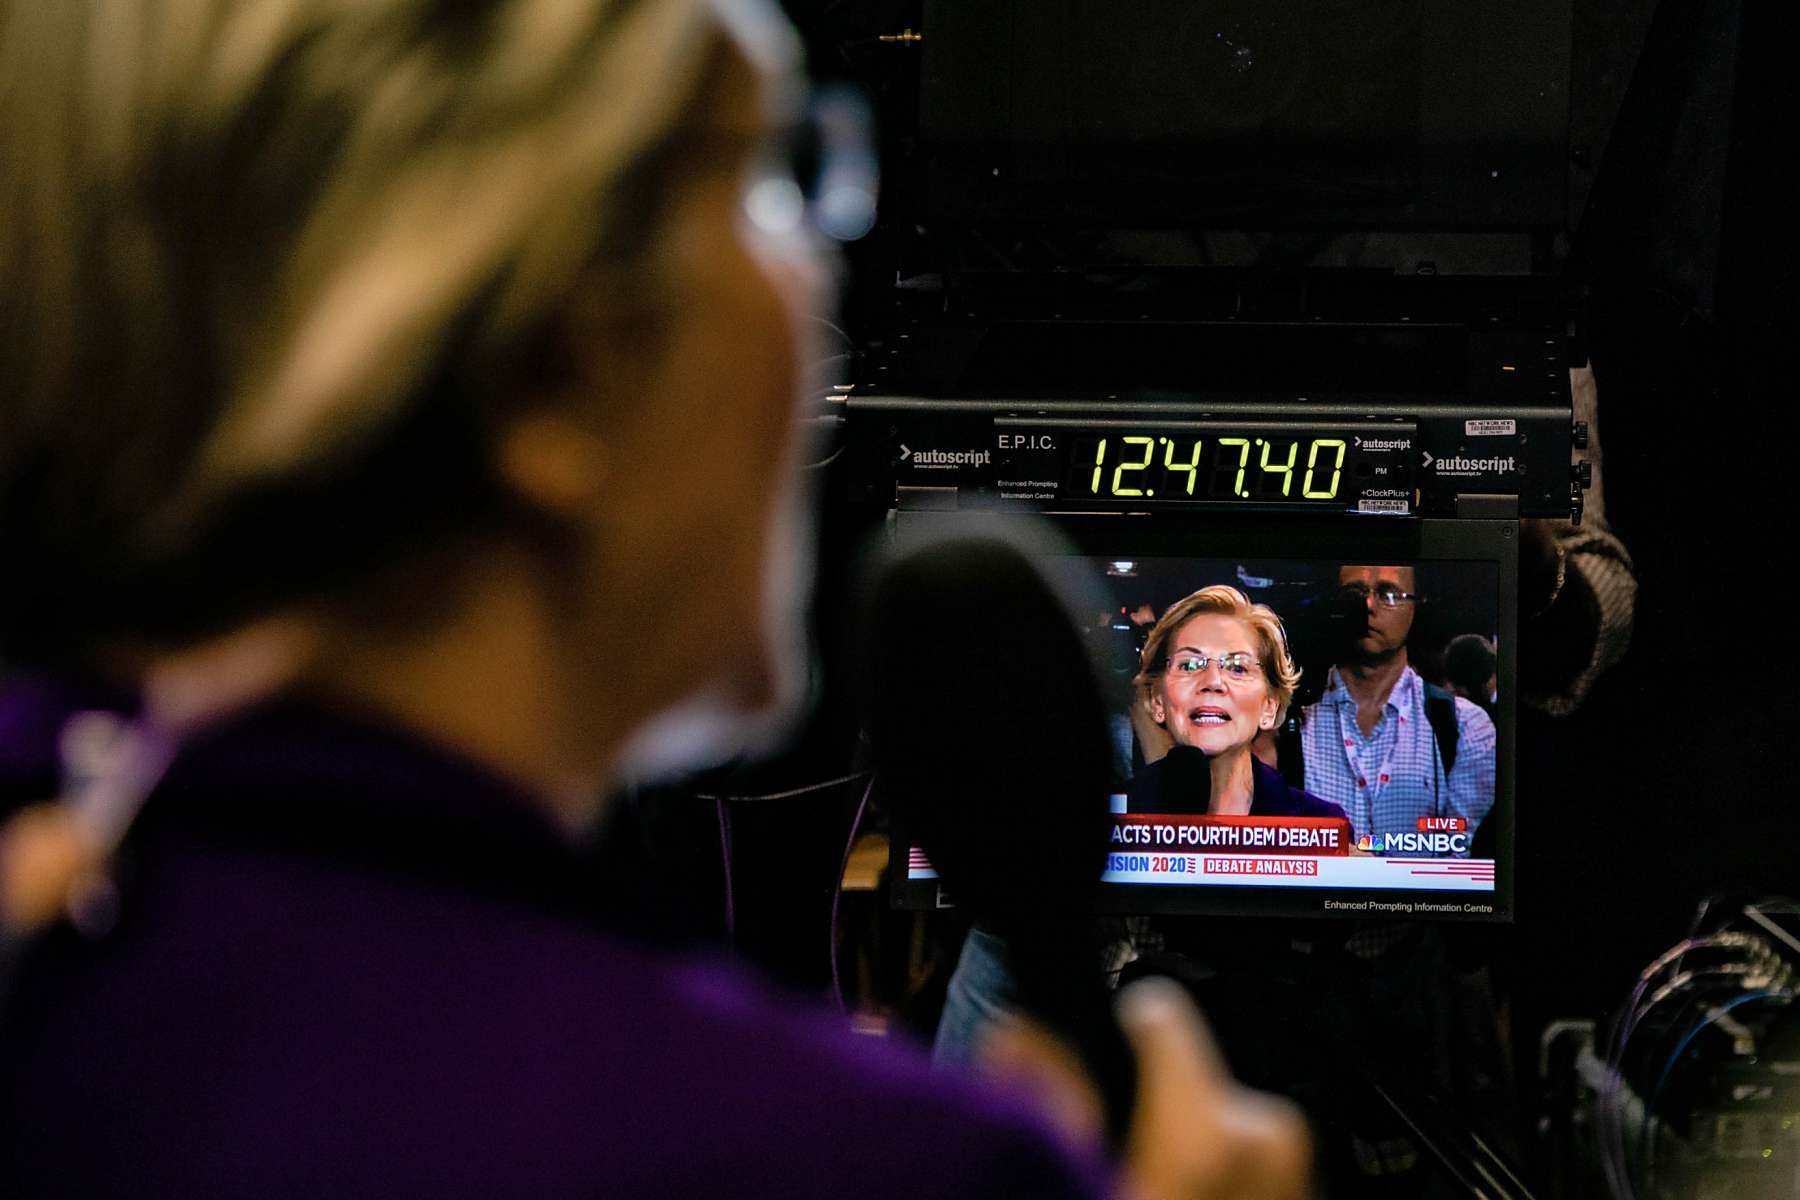 An artful portrait of Senator Elizabeth Warren doing a television segment